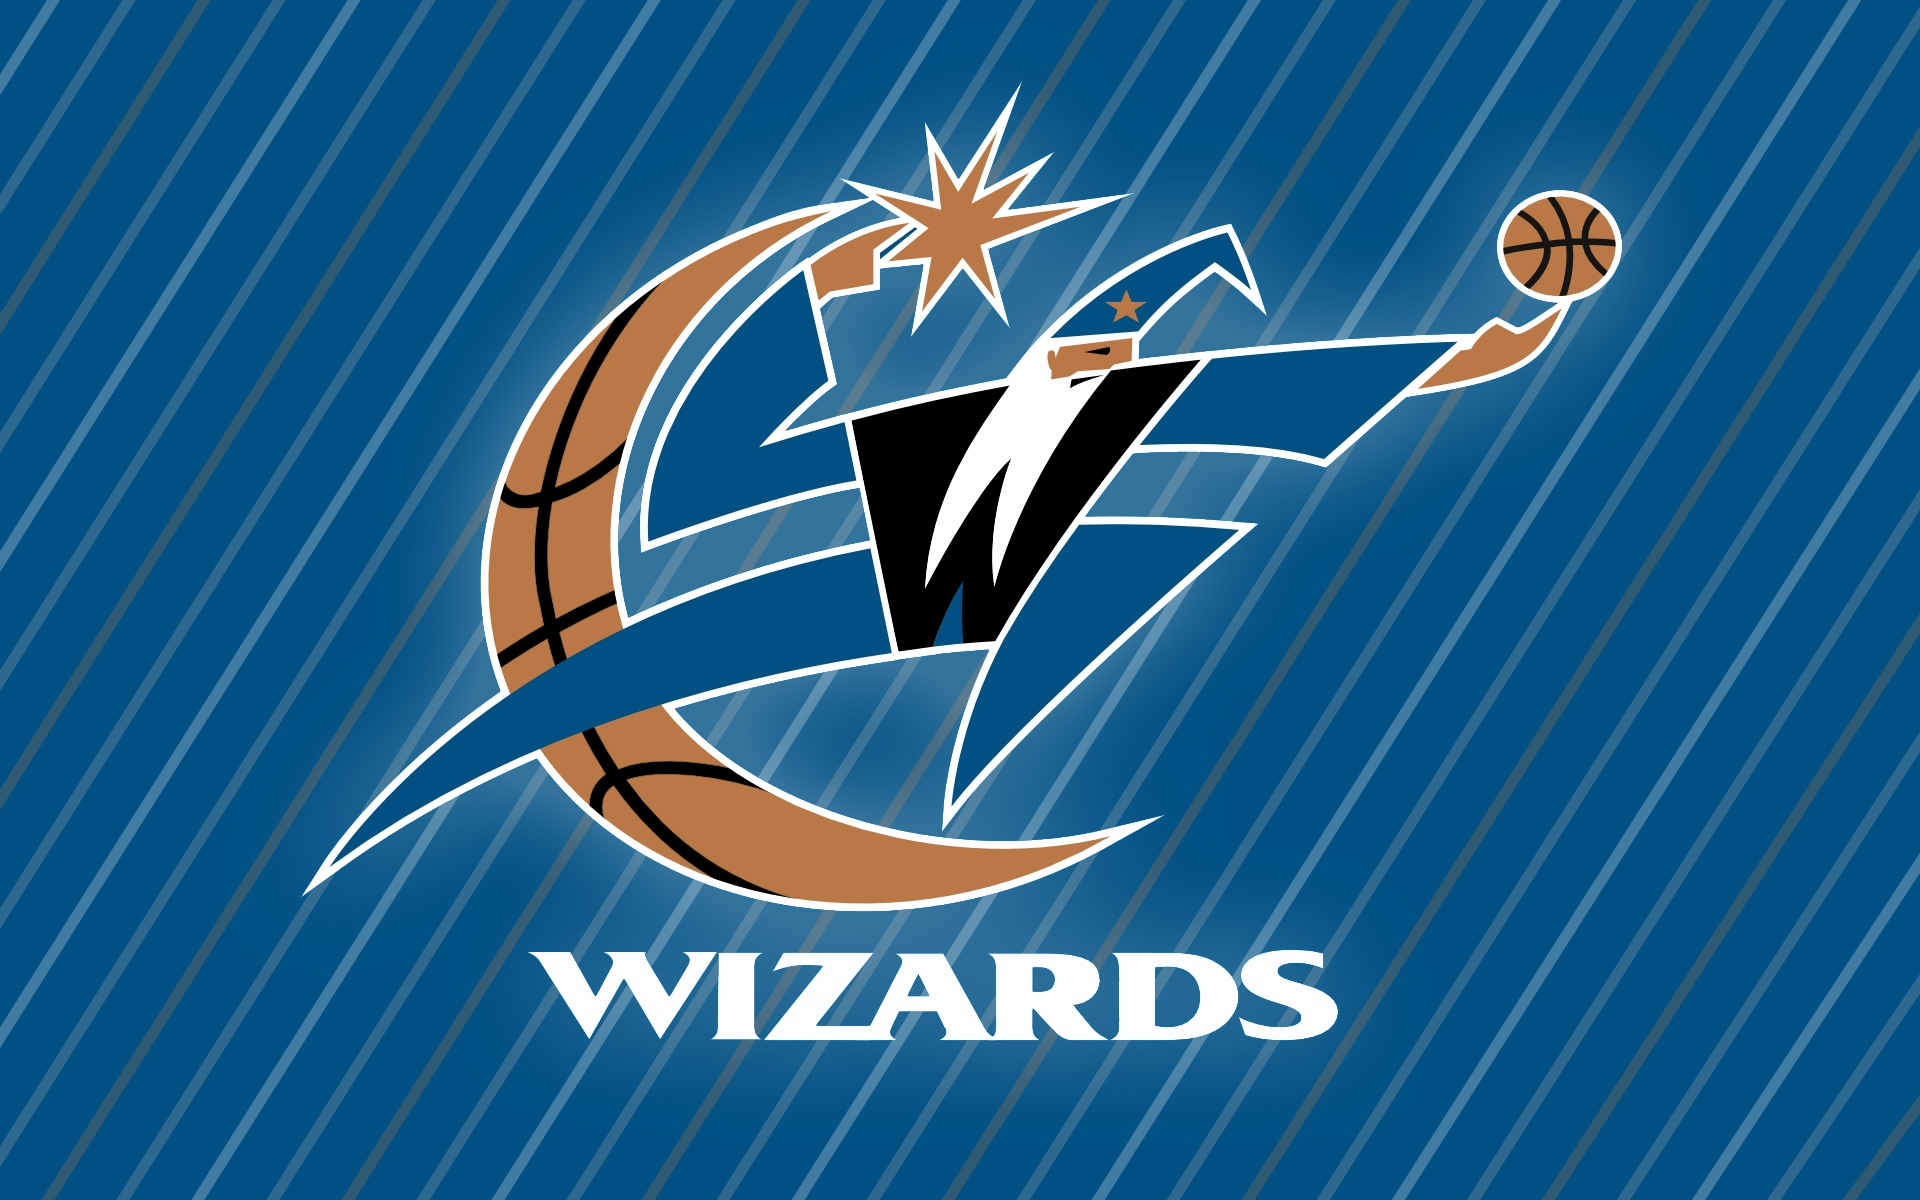 Washington Wizards rumors